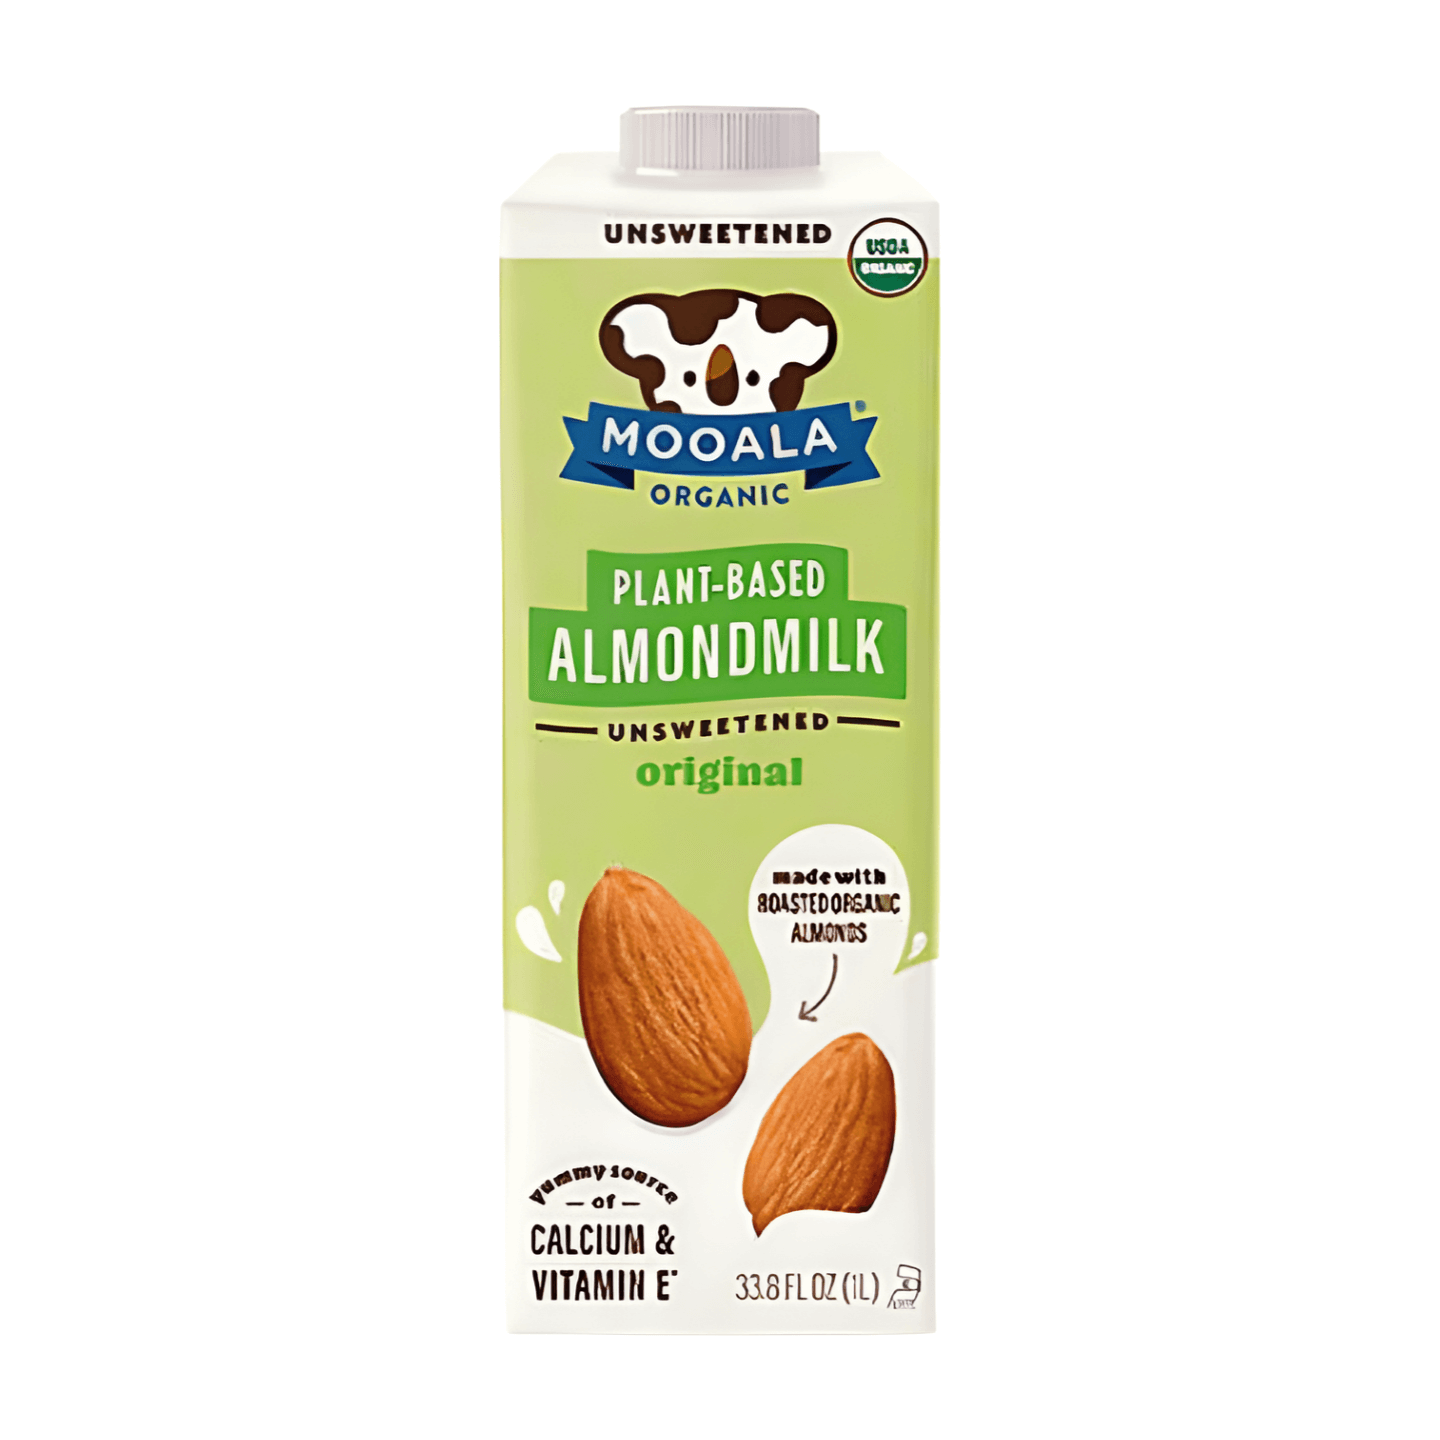 Mooala Unsweetened Almondmilk